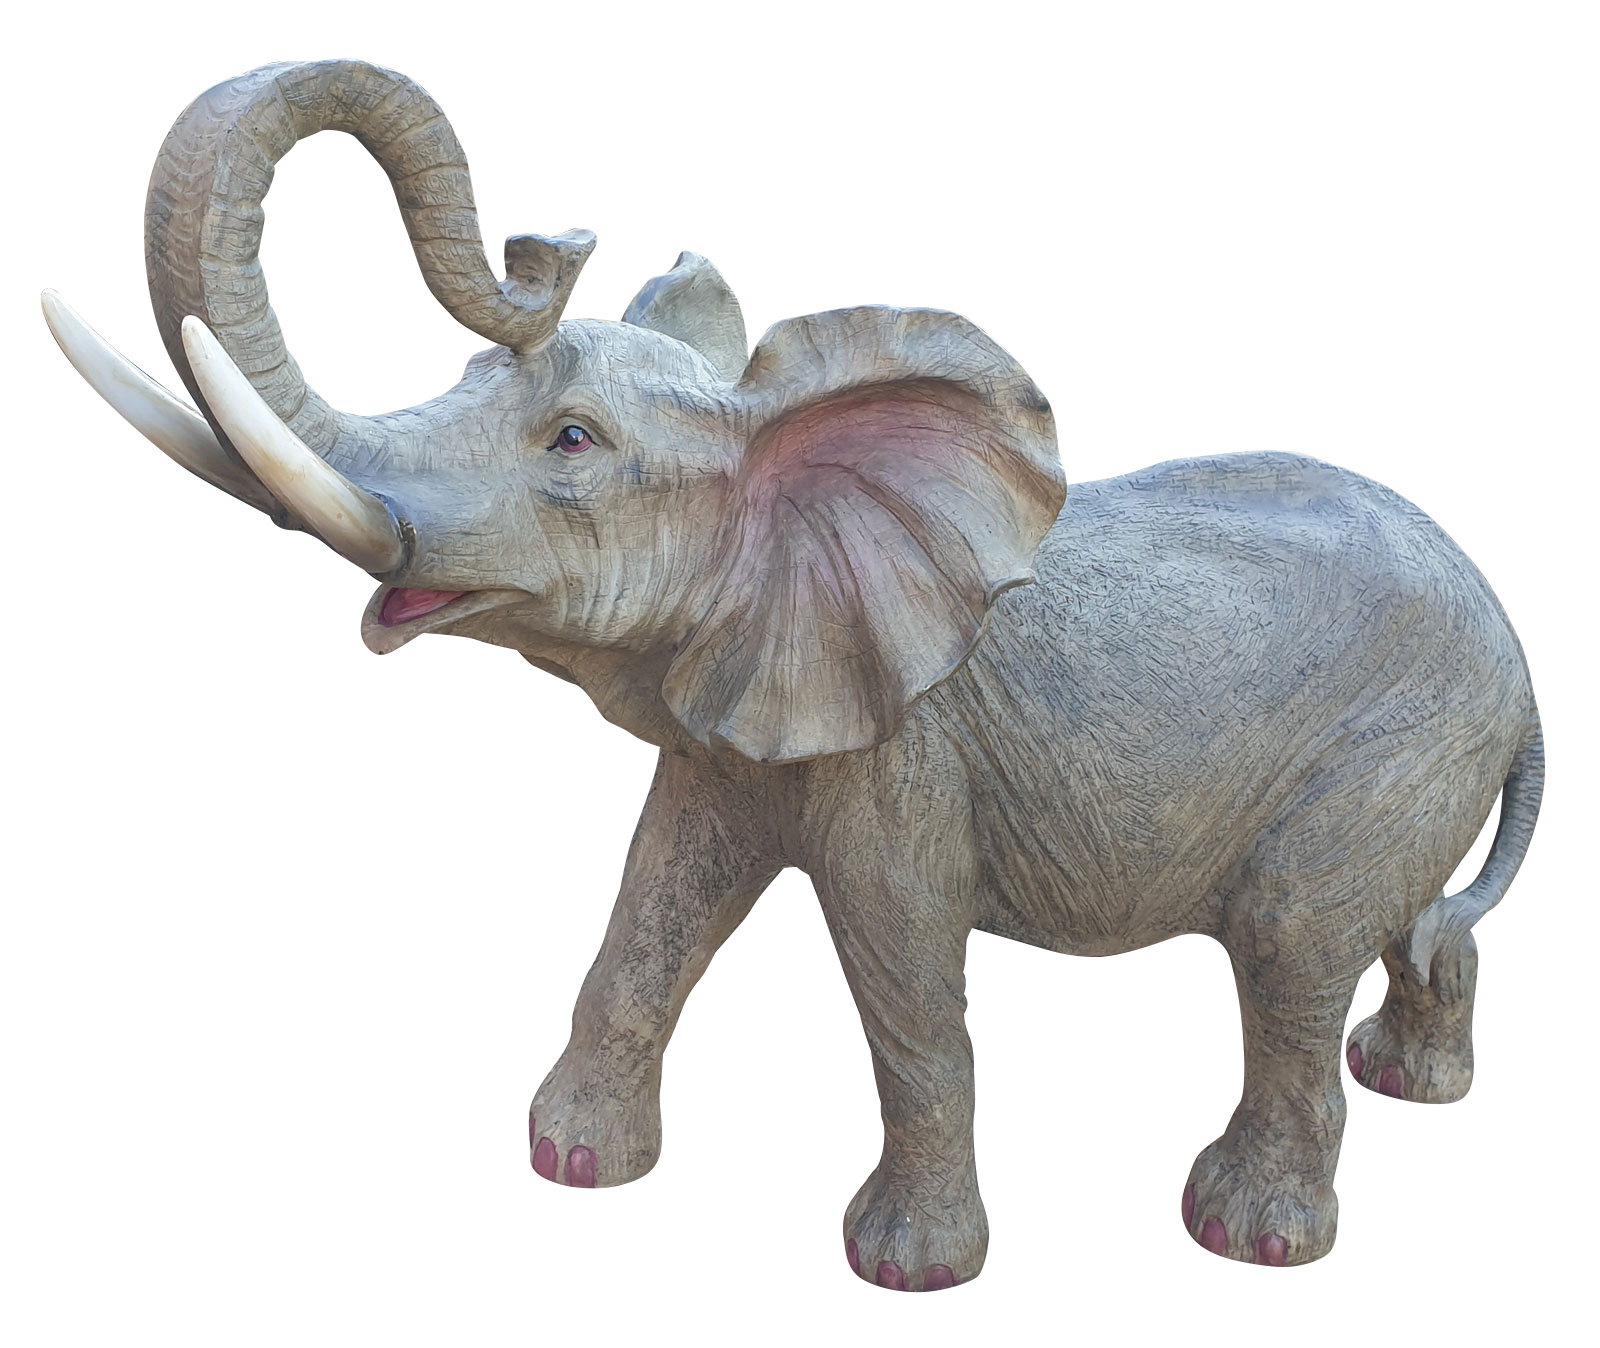 Elefant mit Baby auf Platte Skulptur Deko Garten Tier Figur Afrika Statue 